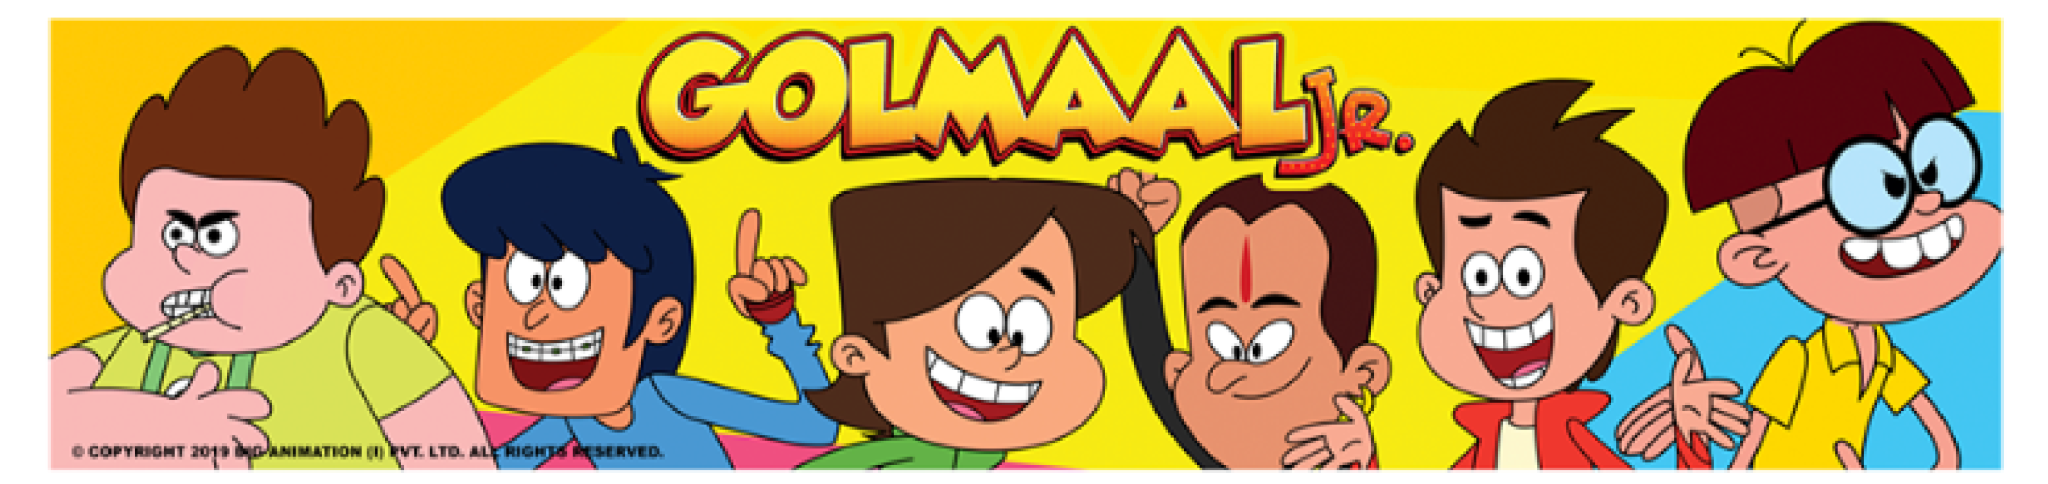 Golmaal Jr, Smashing Simmba, Little Singham UNITE! on Tumblr